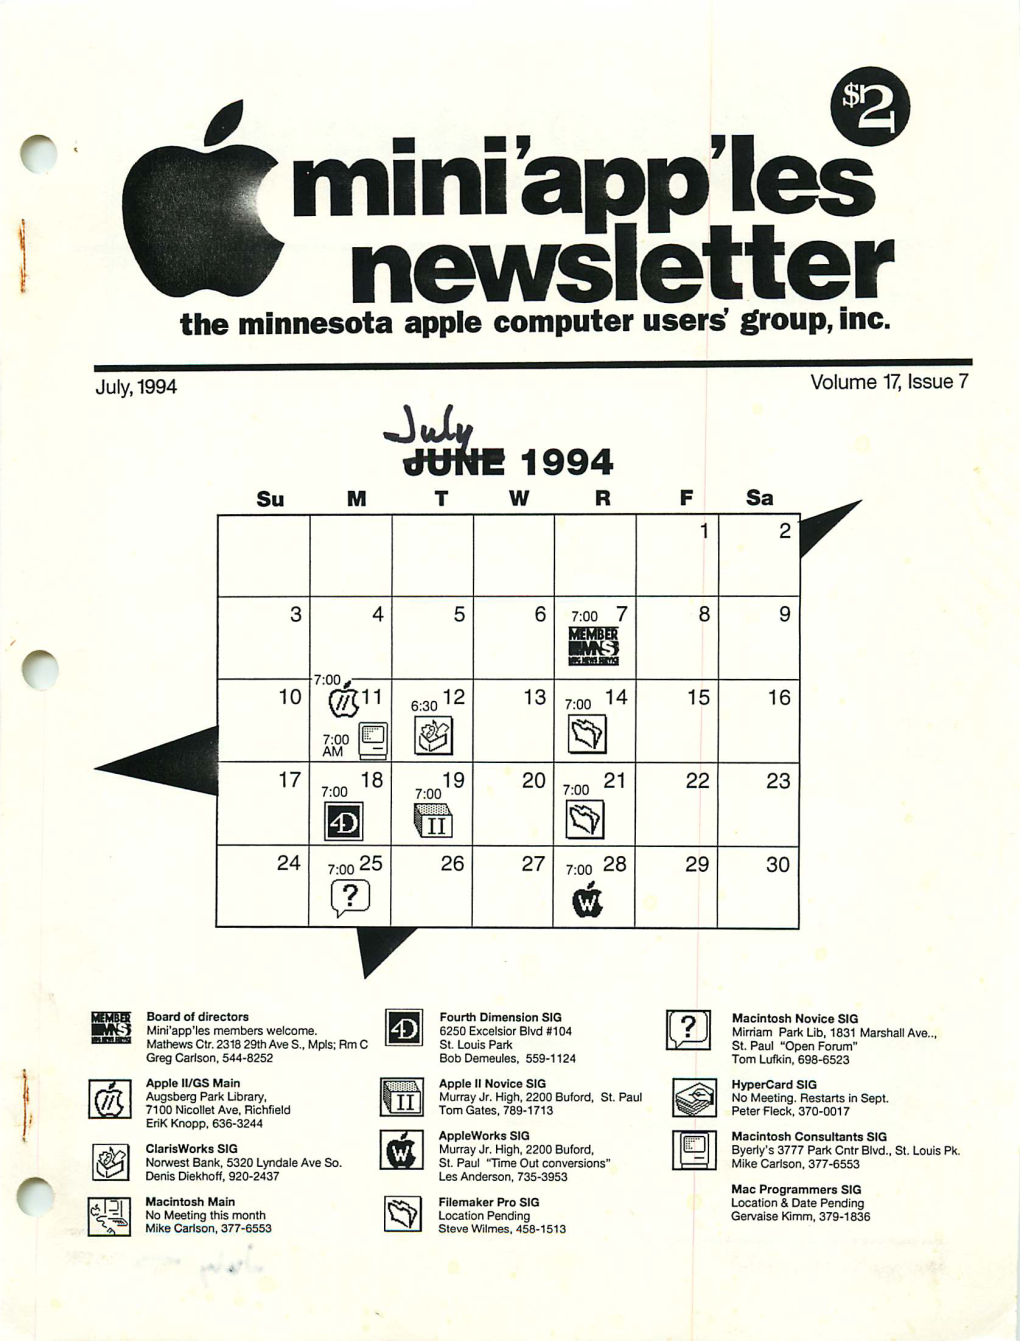 Mini'apples Newsletter the Minnesota Apple Computer Users' Group, Inc